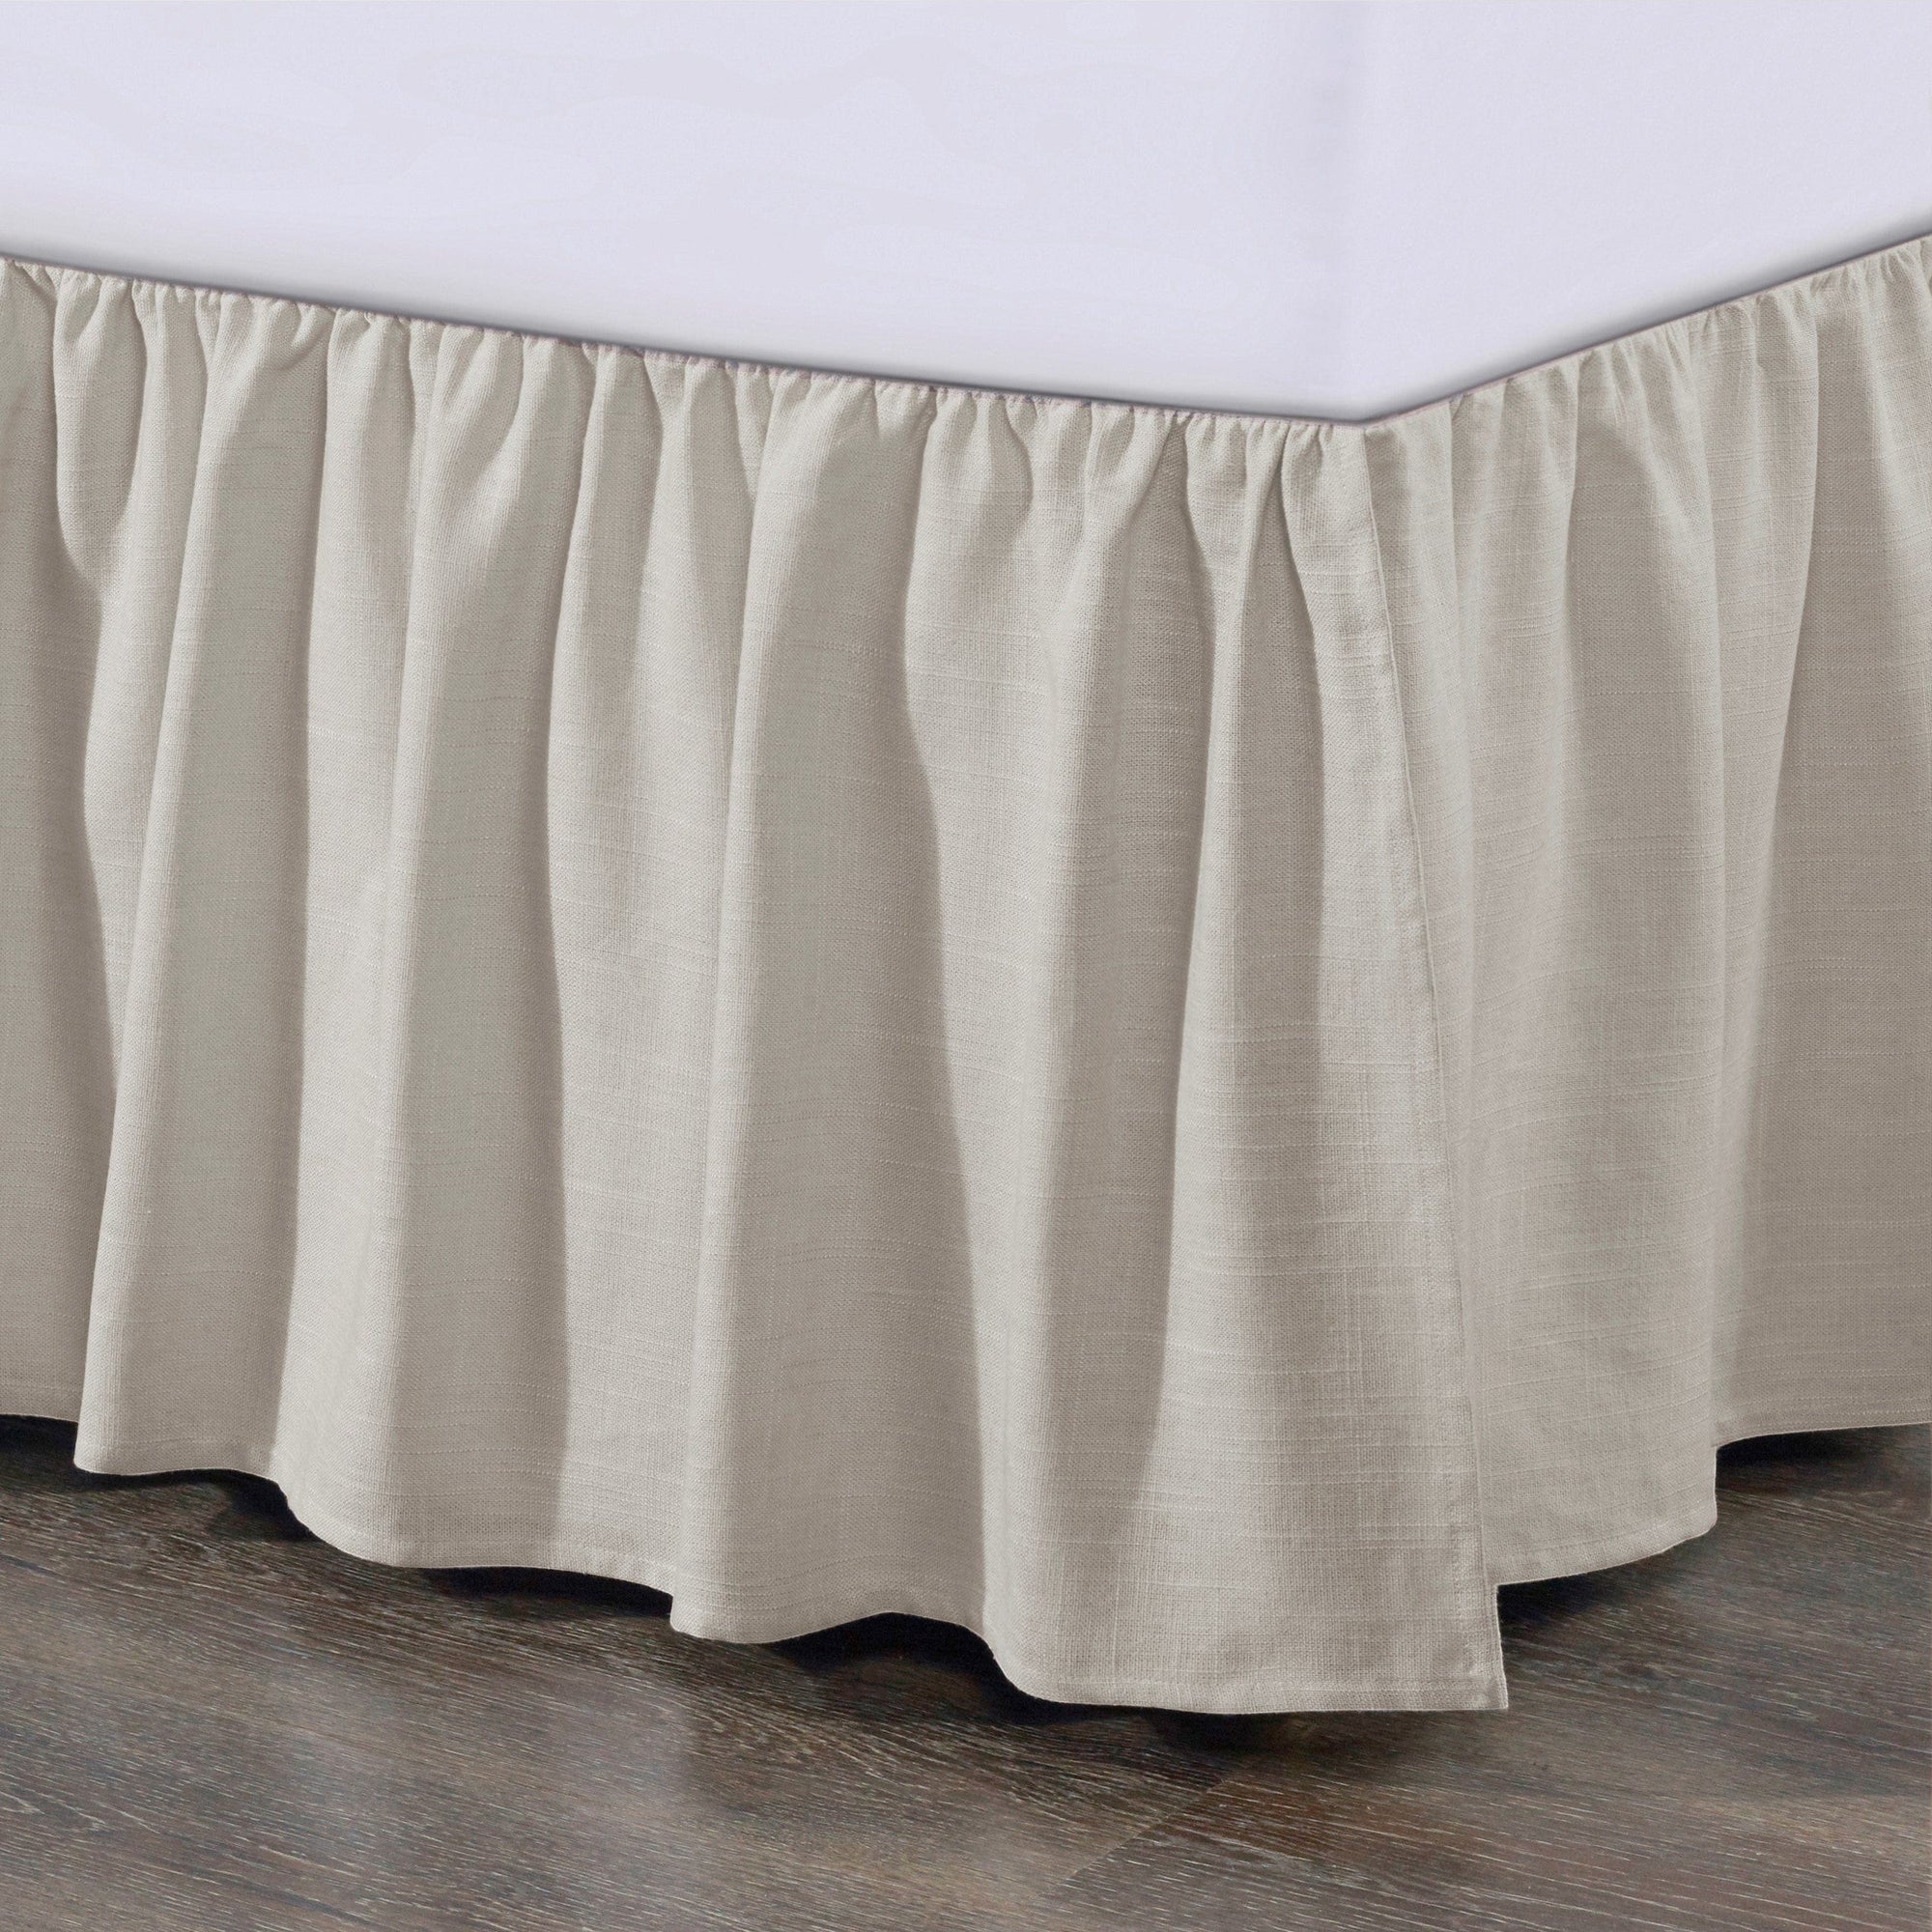 Lily Gathered Linen Bed Skirt Queen / Light Tan Bed Skirt